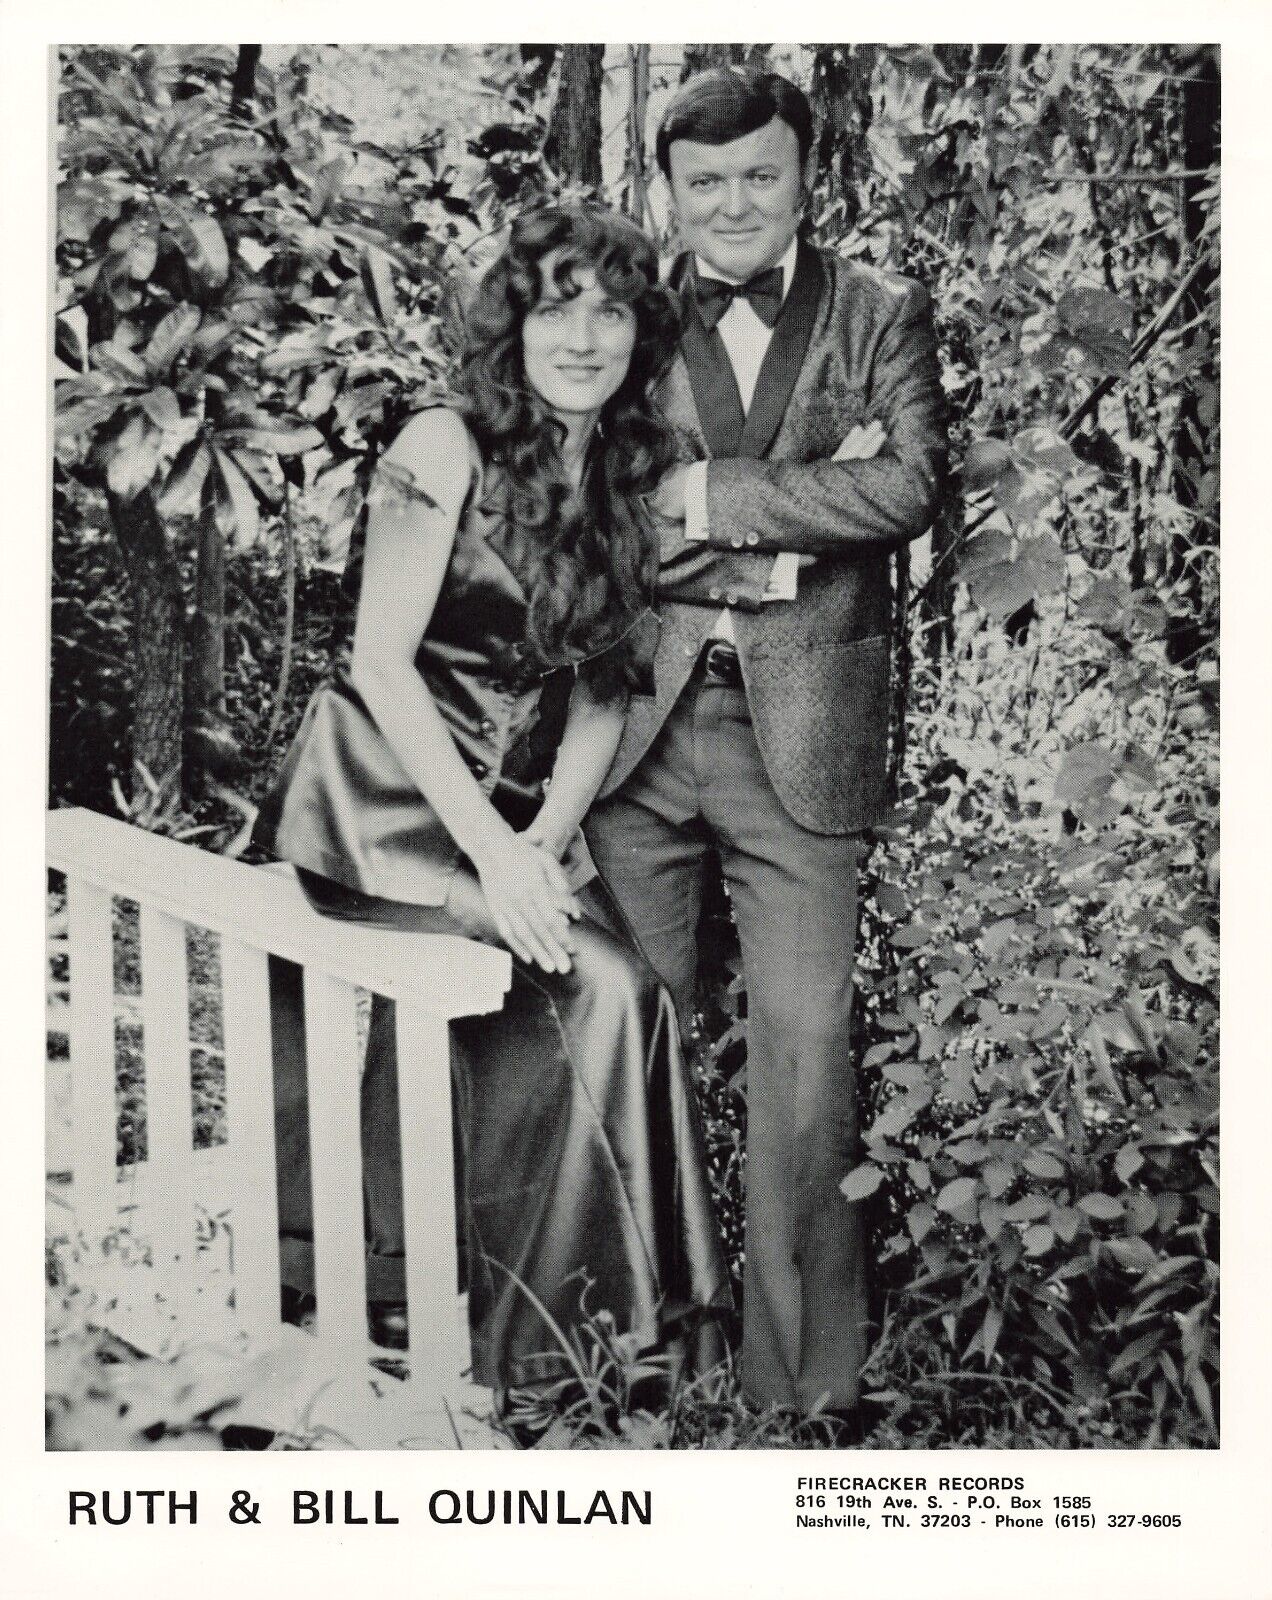 Ruth & Bill Quinlan 1970s Press Photo Band Portrait Firecracker Records  *P75b